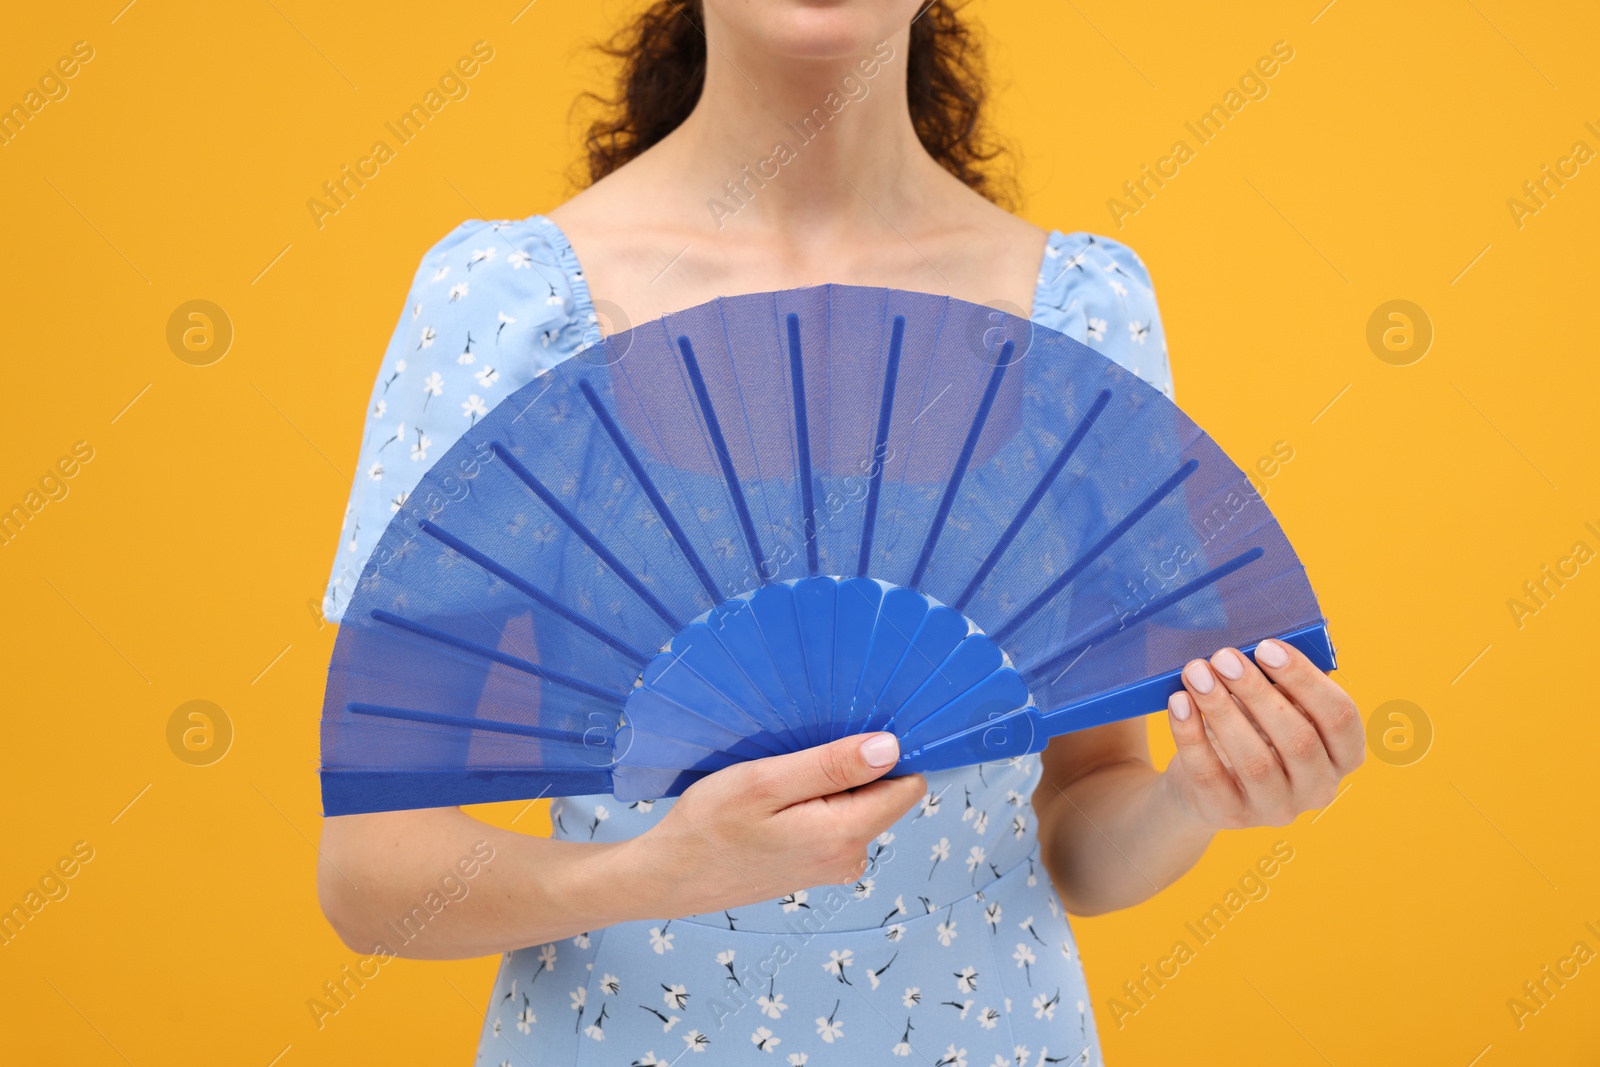 Photo of Woman holding hand fan on orange background, closeup